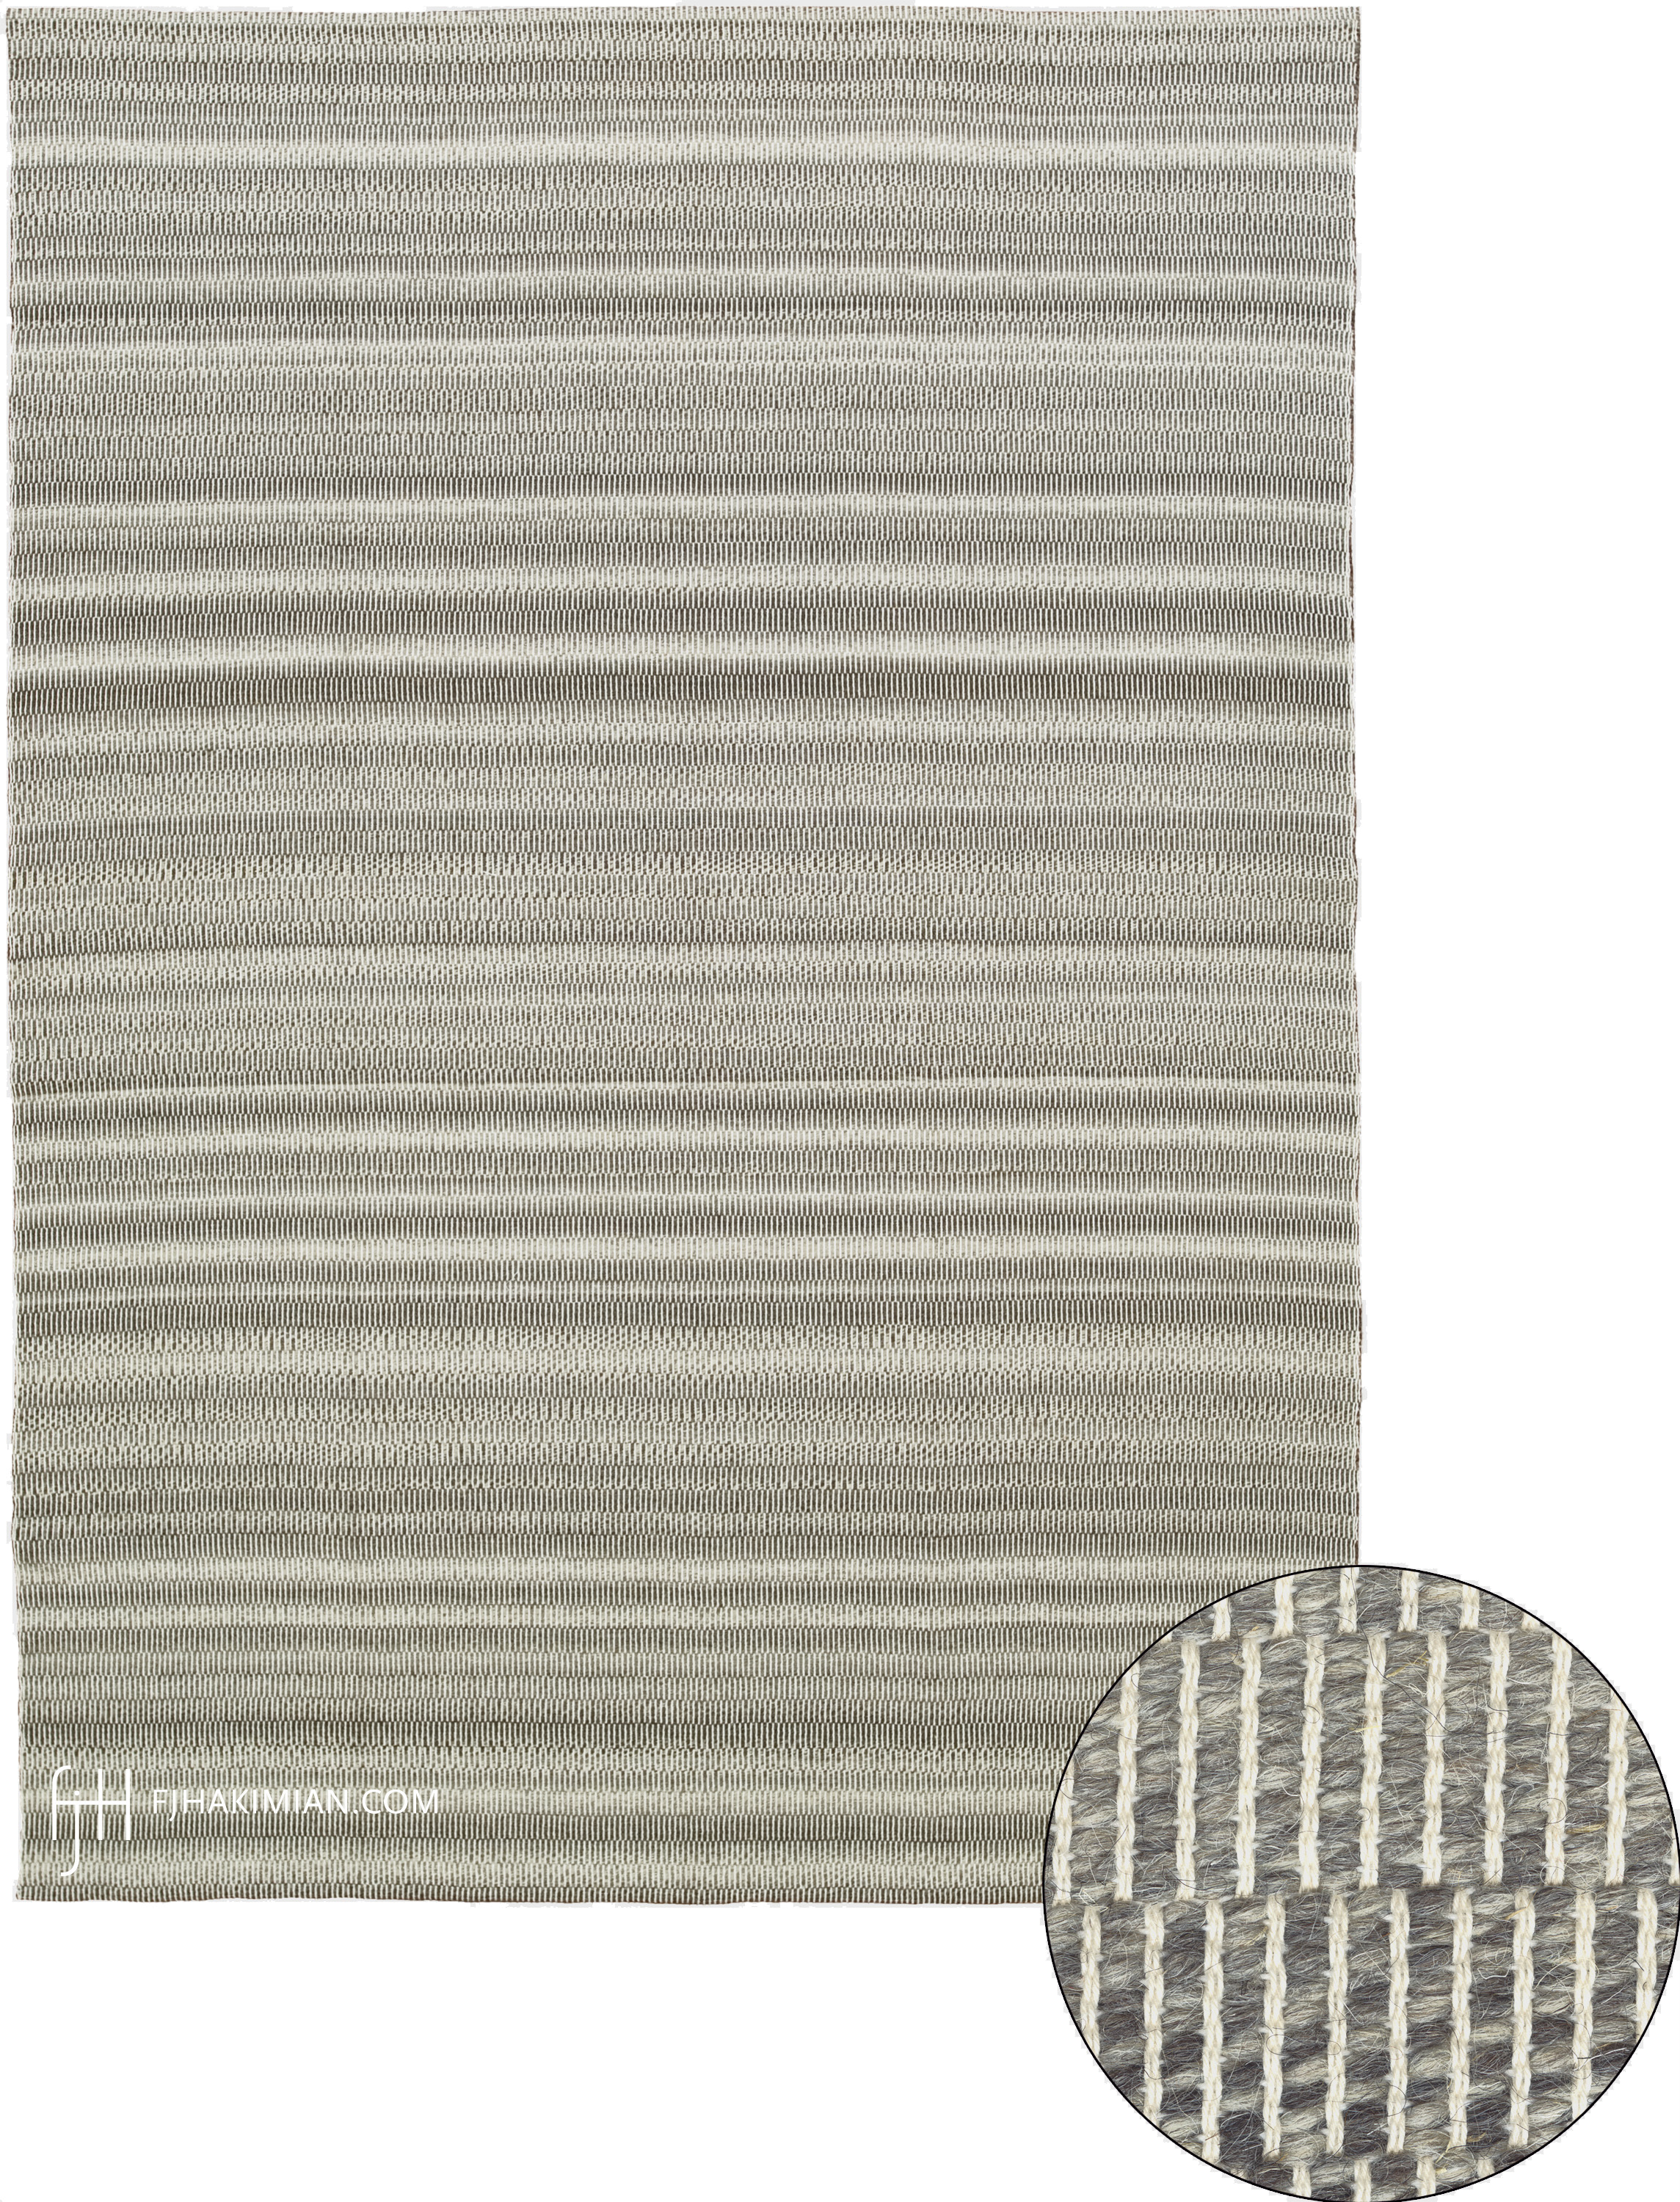 25129 | IF-108 Design | Custom Sardinian Carpet | FJ Hakimian | Carpet Gallery in NYC